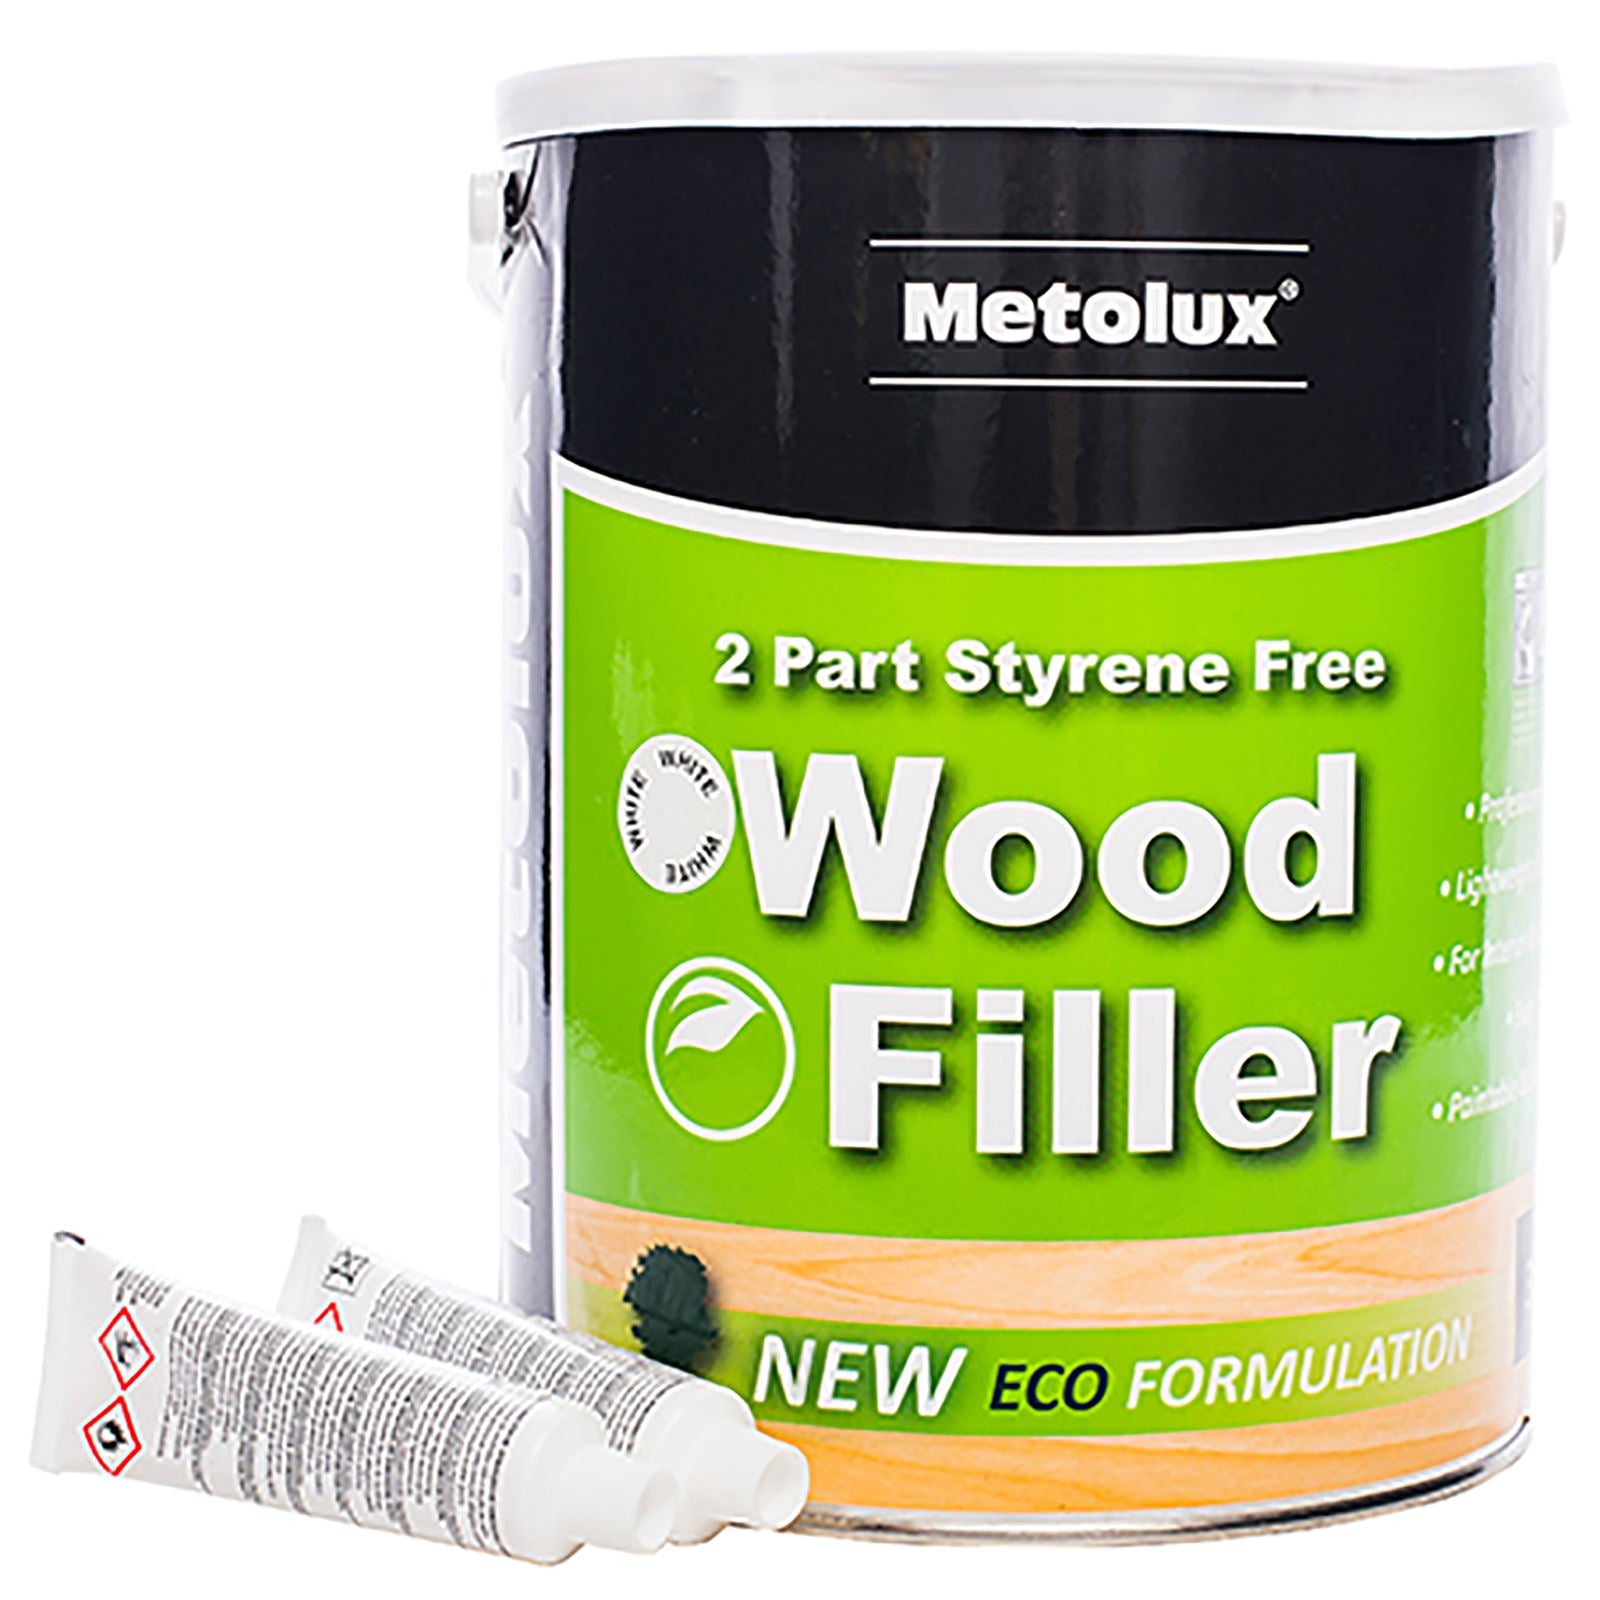 Metolux Wood Filler 2 Part Styrene Free High Strength Professional Grade